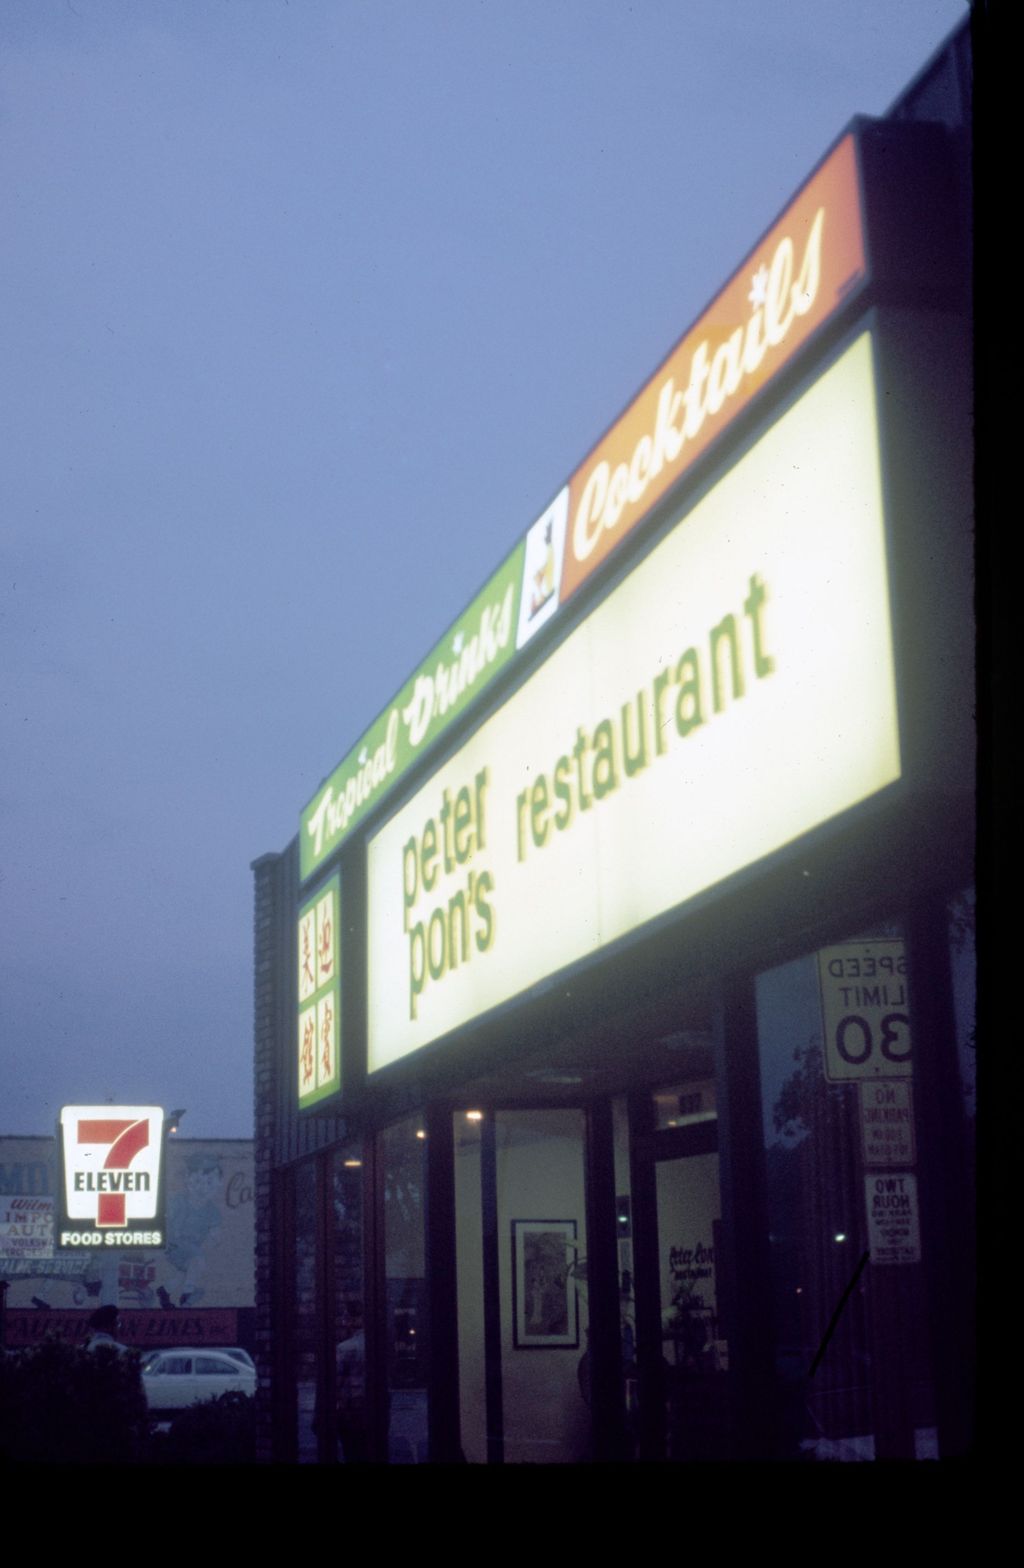 Miniature of Peter Pon's Restaurant sign, Wilmette